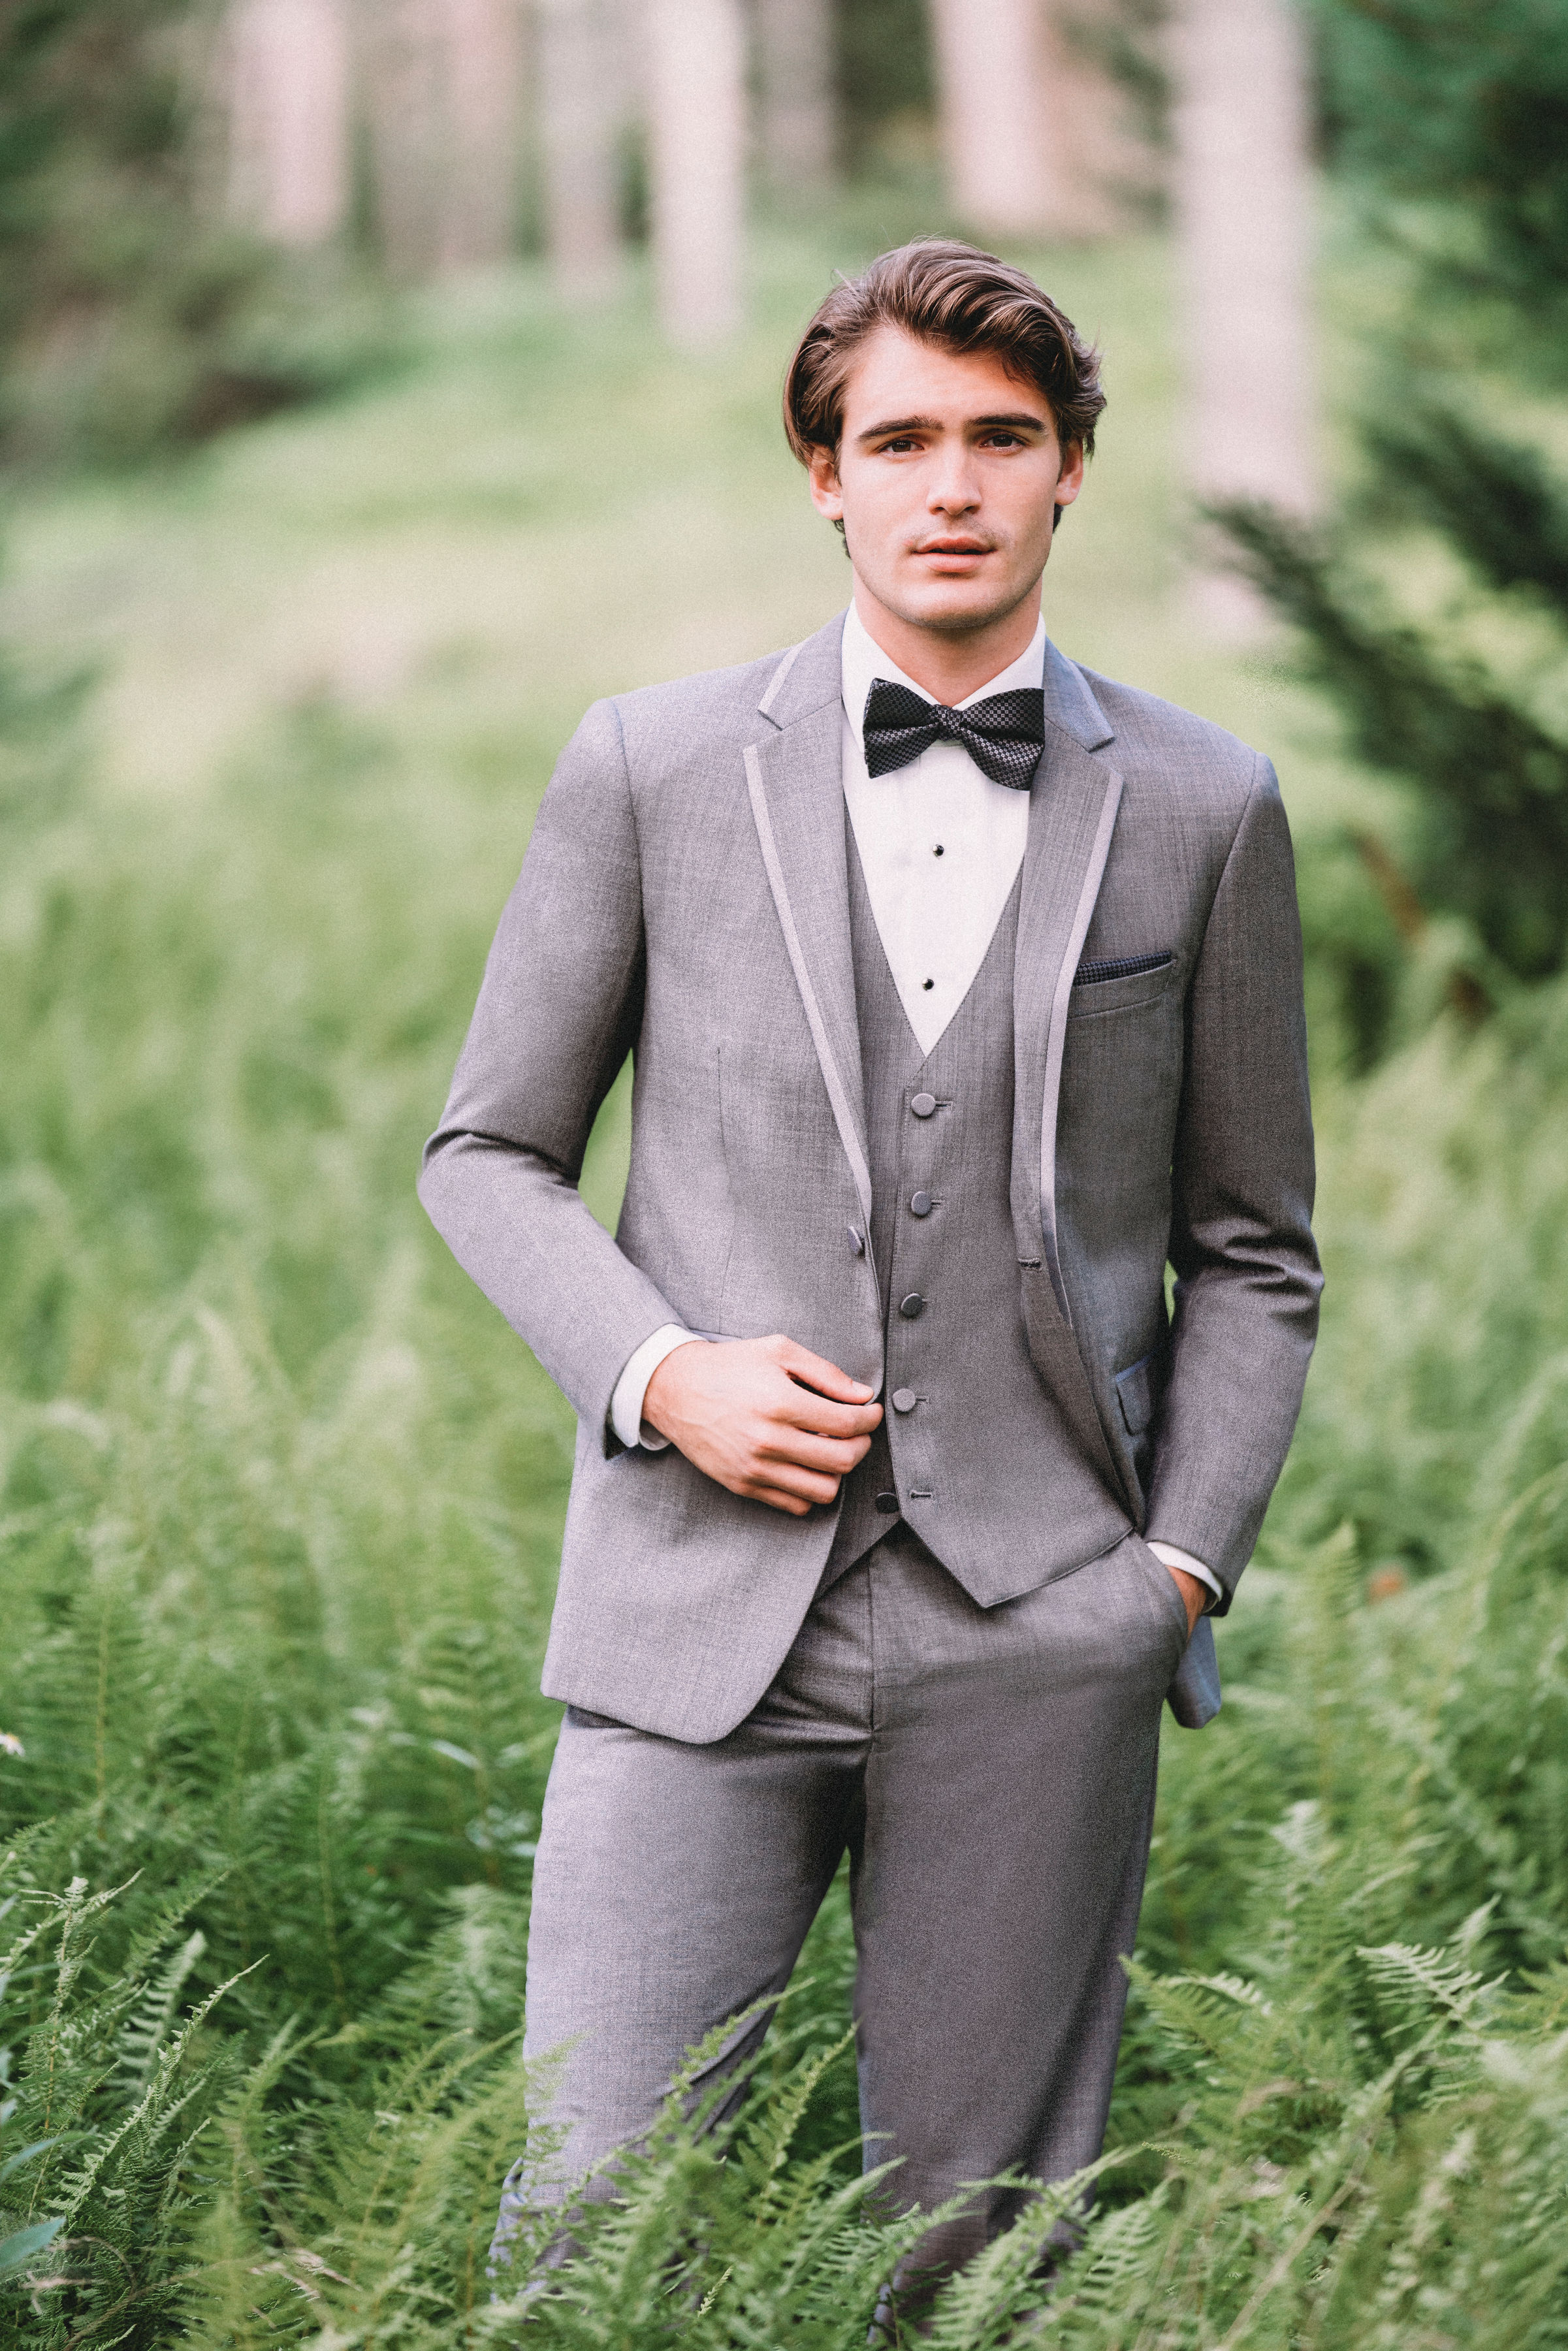 Designer Page - Allure Men - Tuxedo Rental, Suits and ...